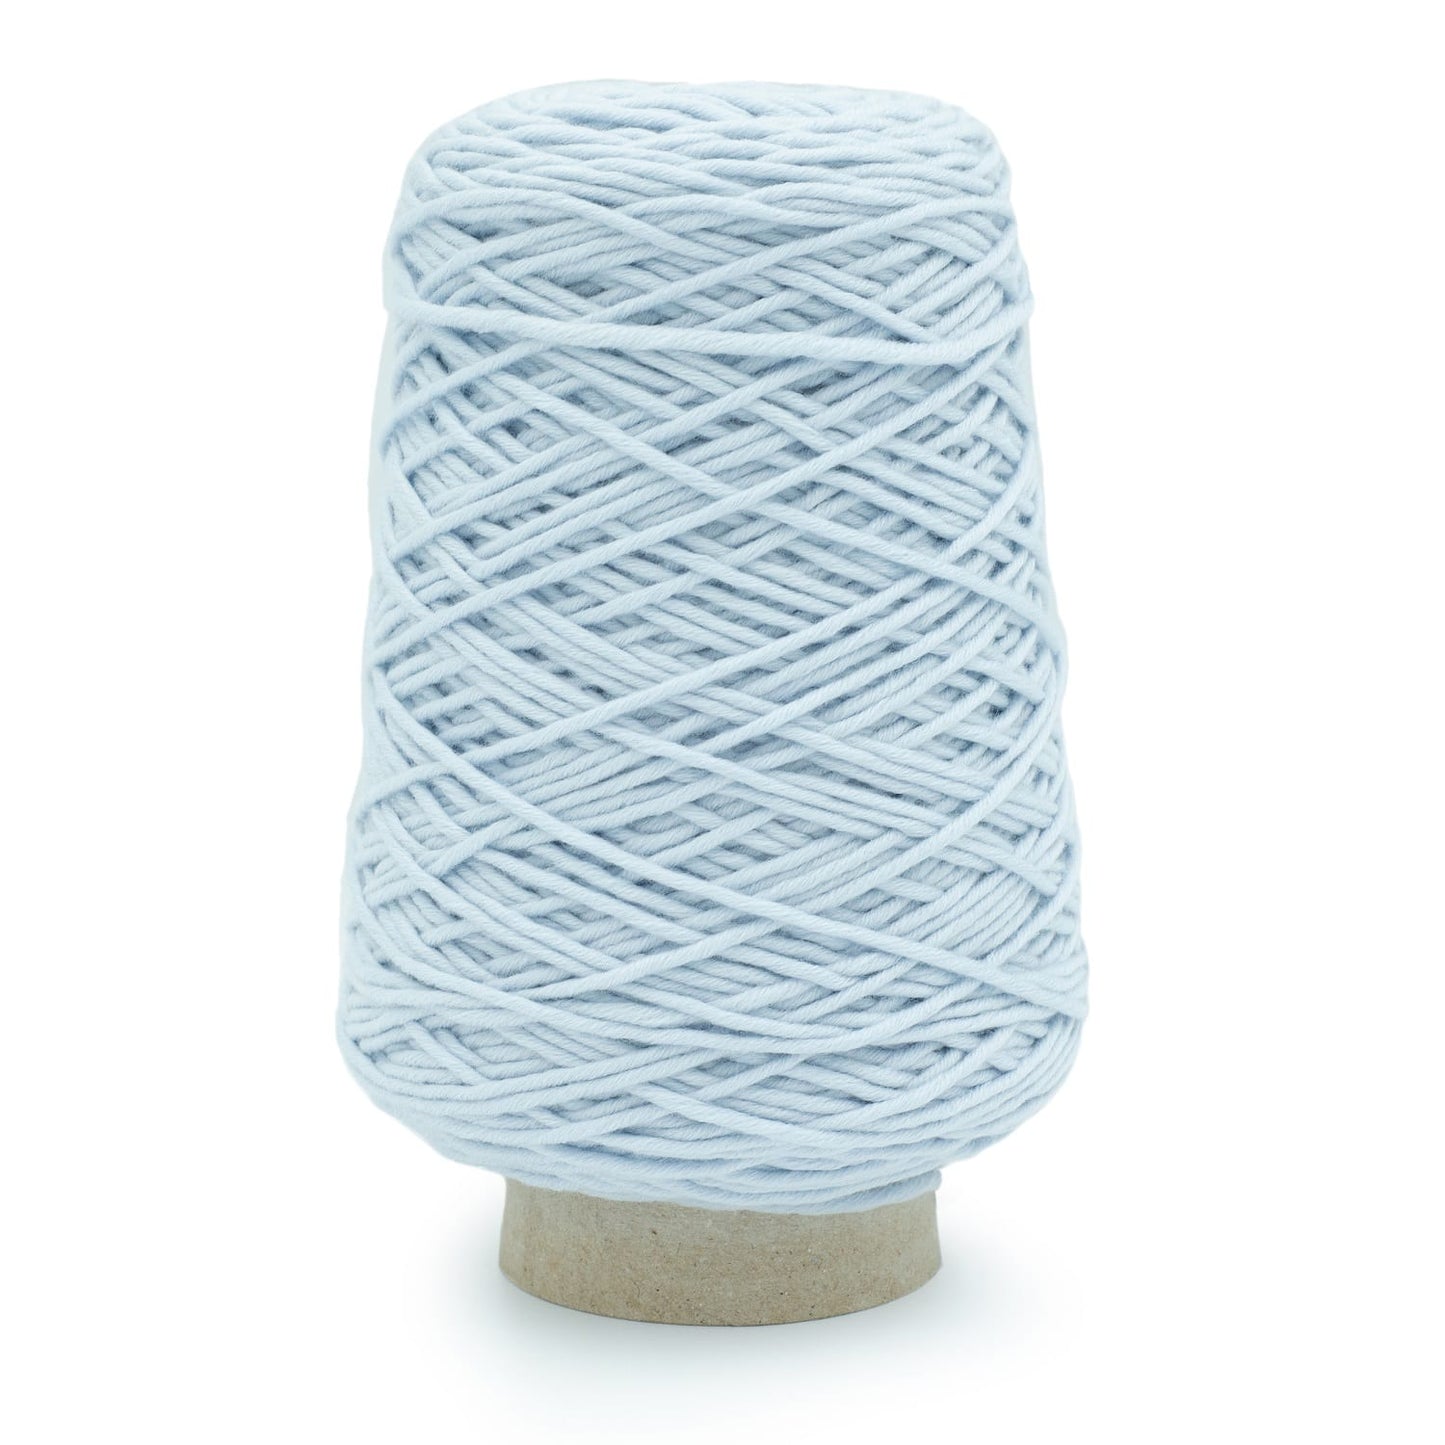 Chunky Merino Wool Cone Yarn